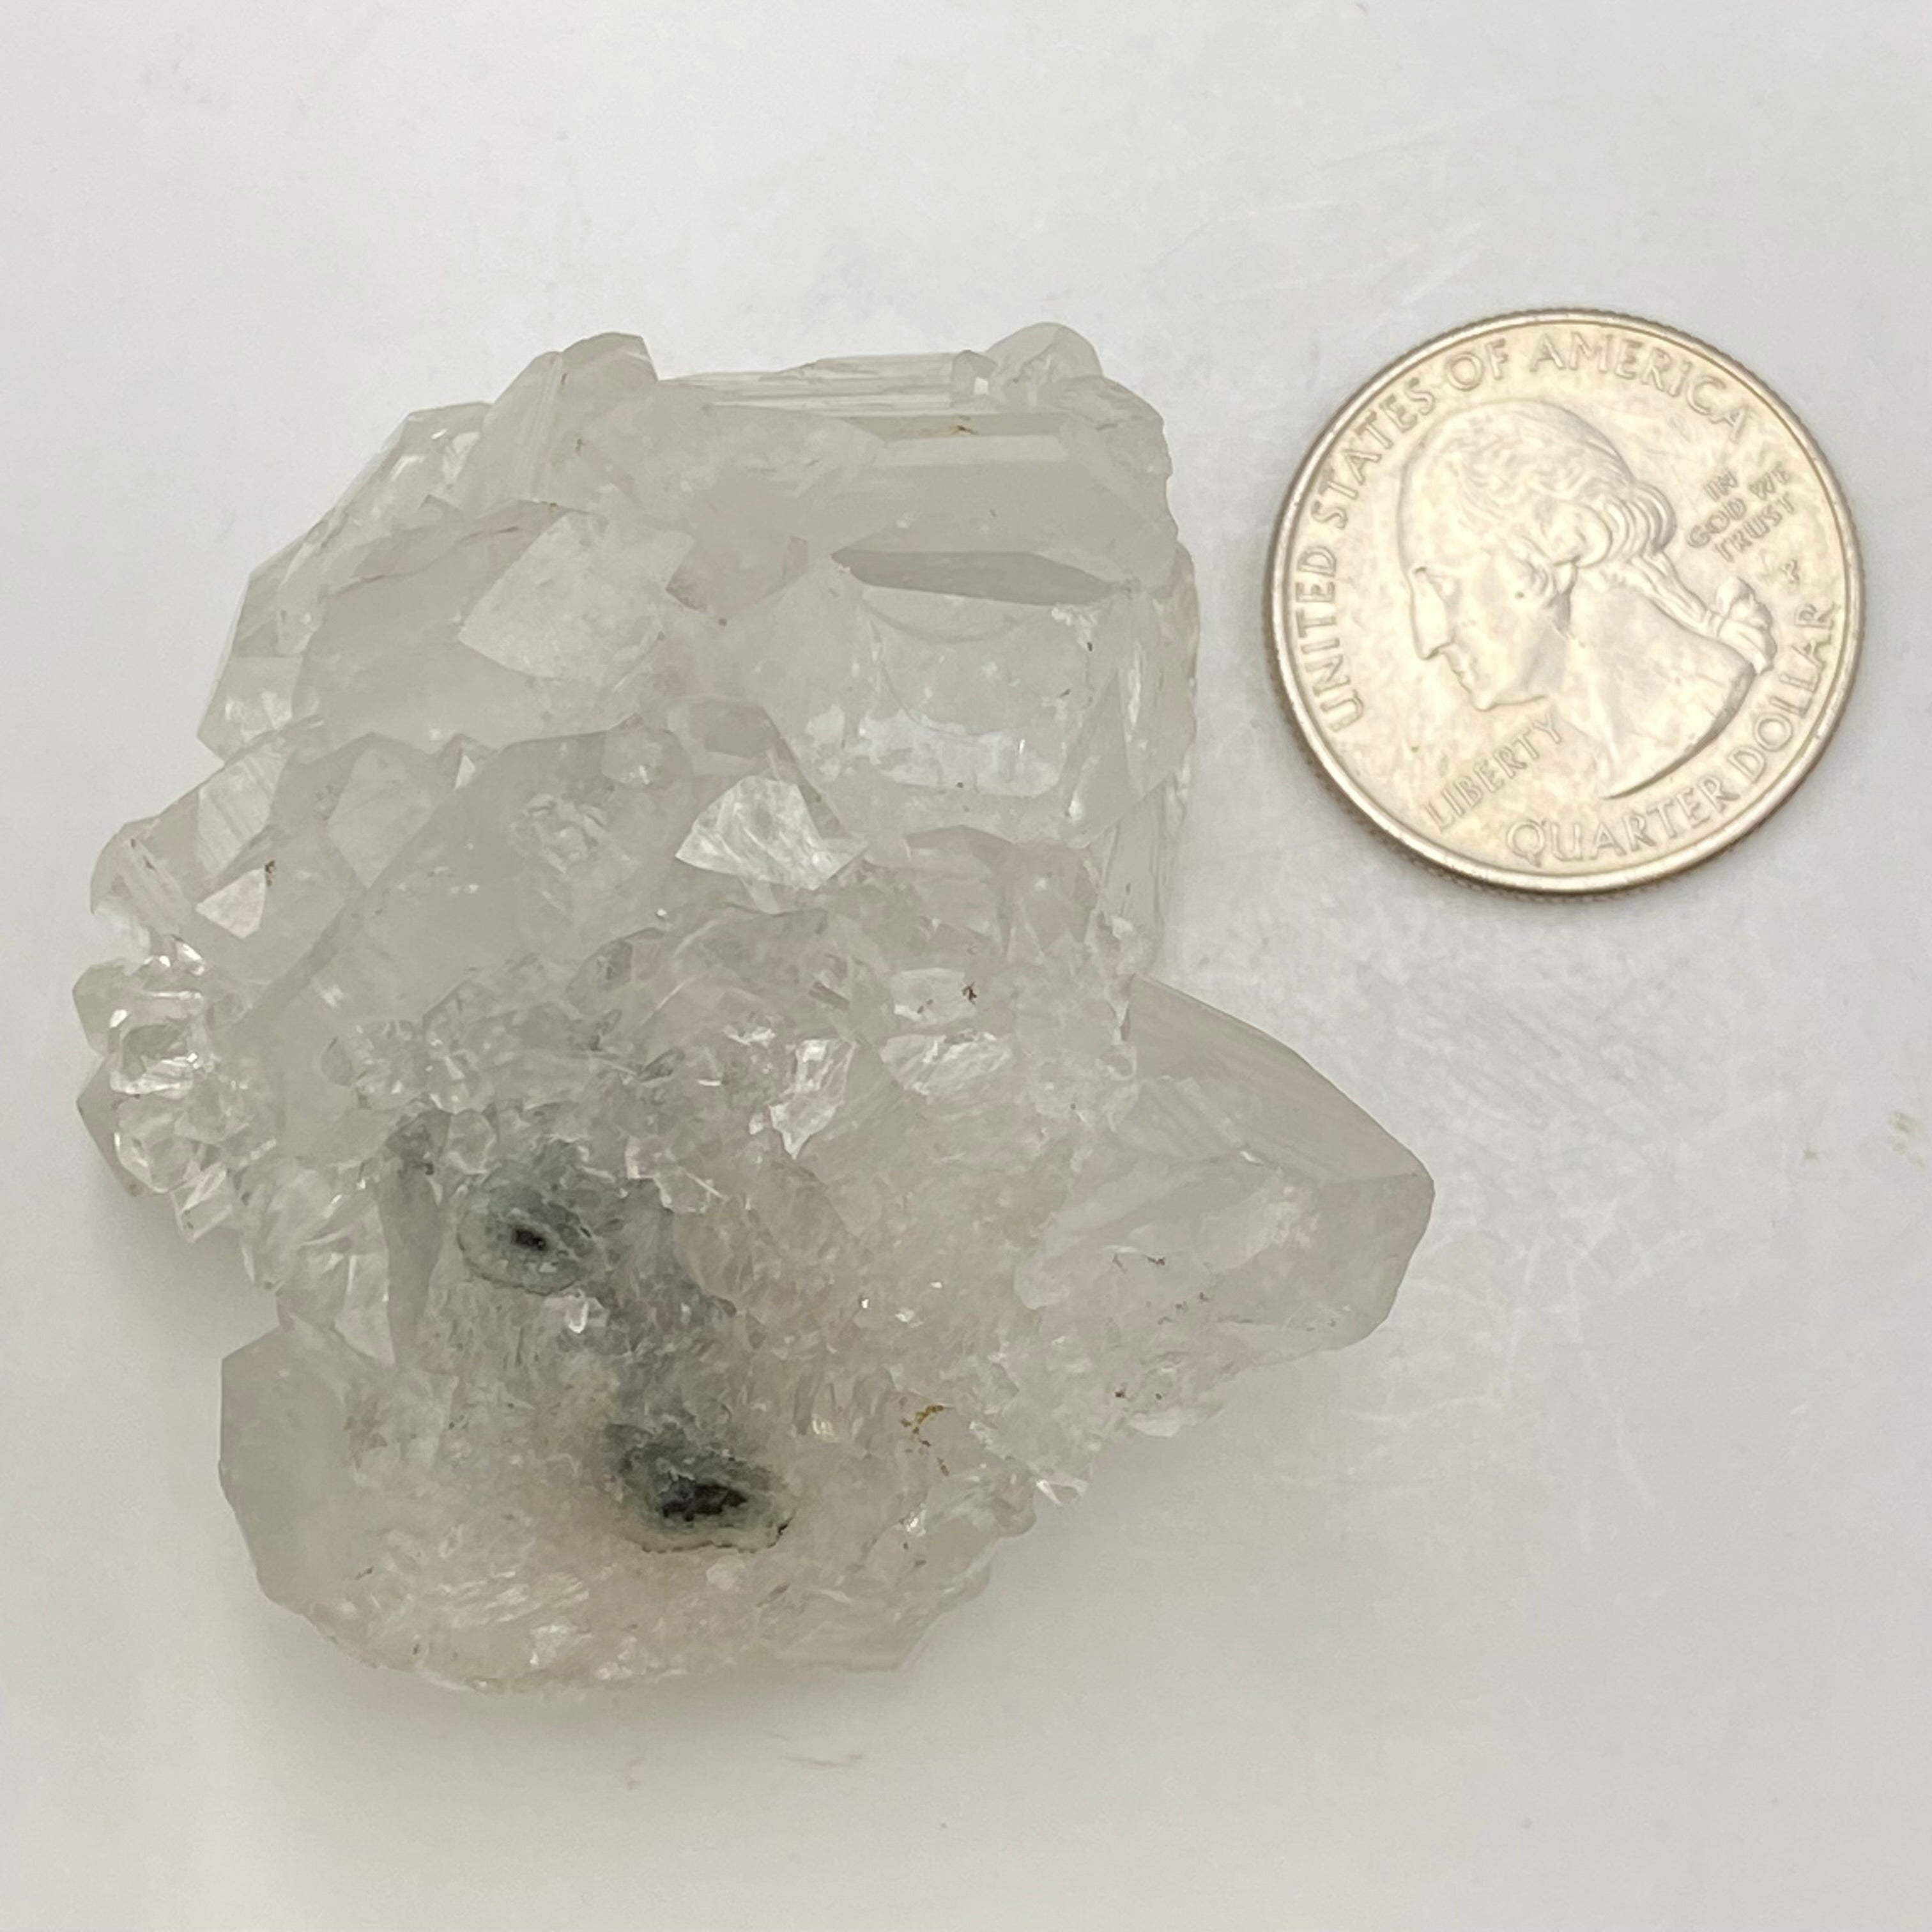 Apophyllite Crystal - 123